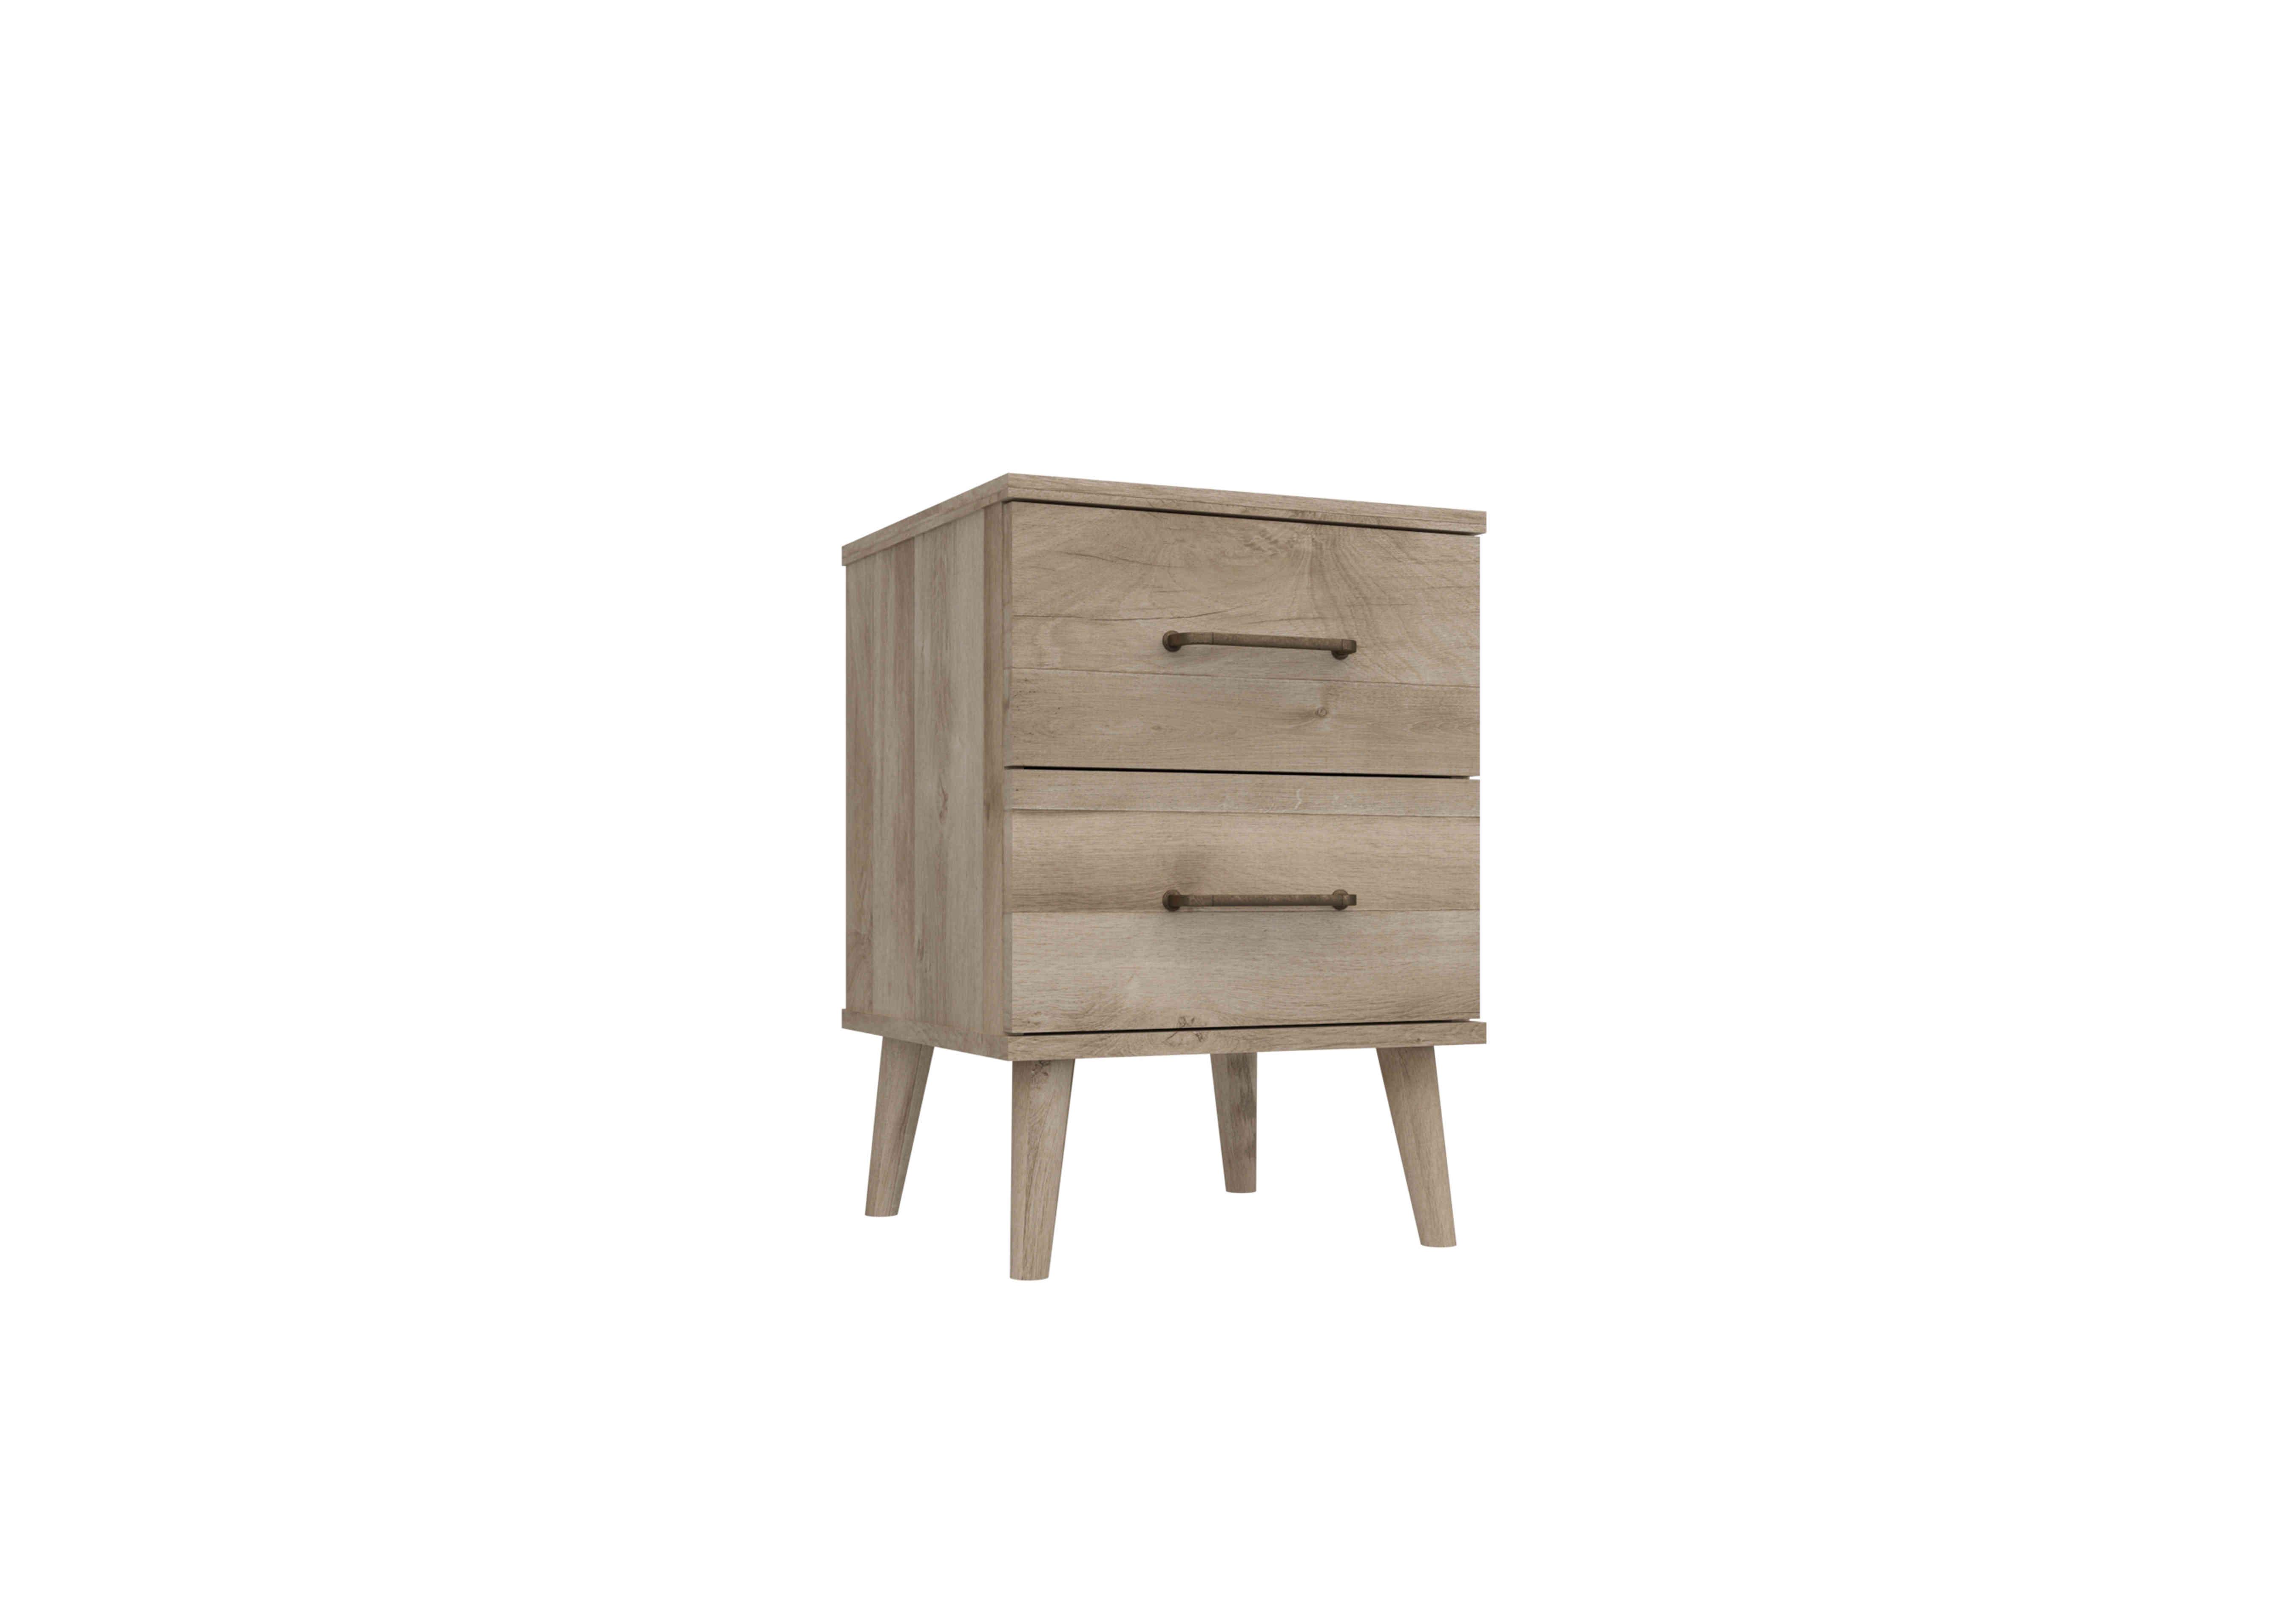 Finchley 2 Drawer Bedside Cabinet in Italian Natural Oak on Furniture Village